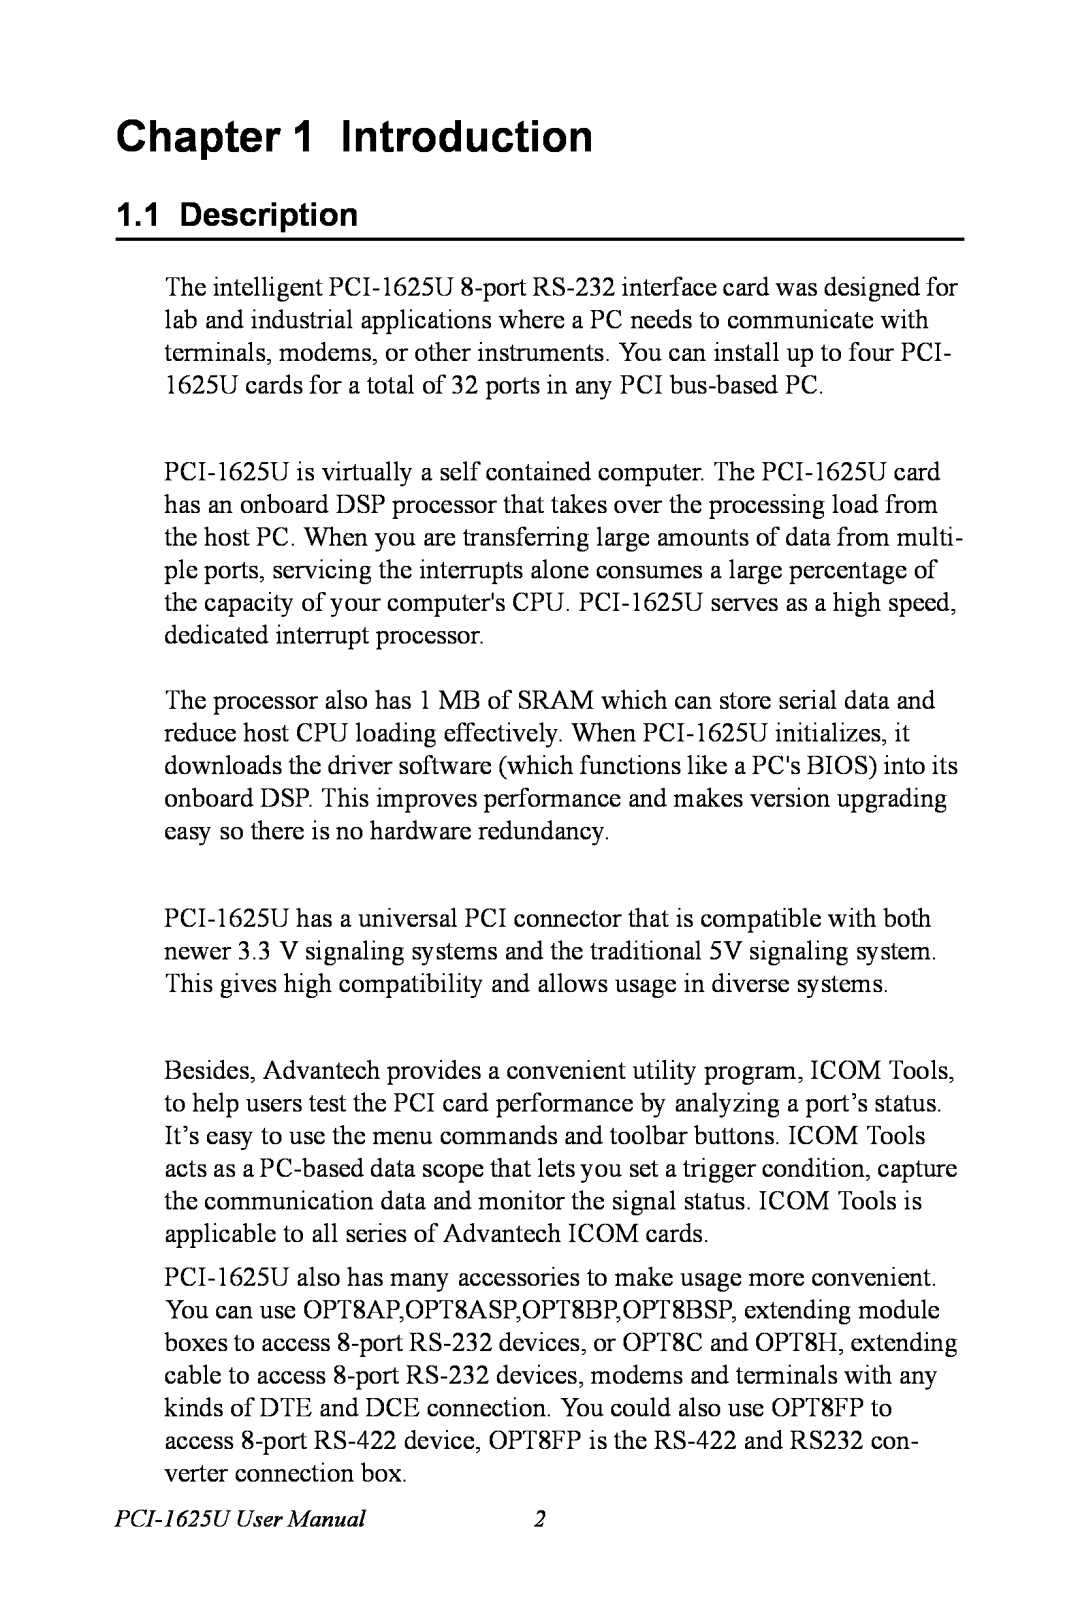 Advantech PCI-1625U user manual Introduction, Description 